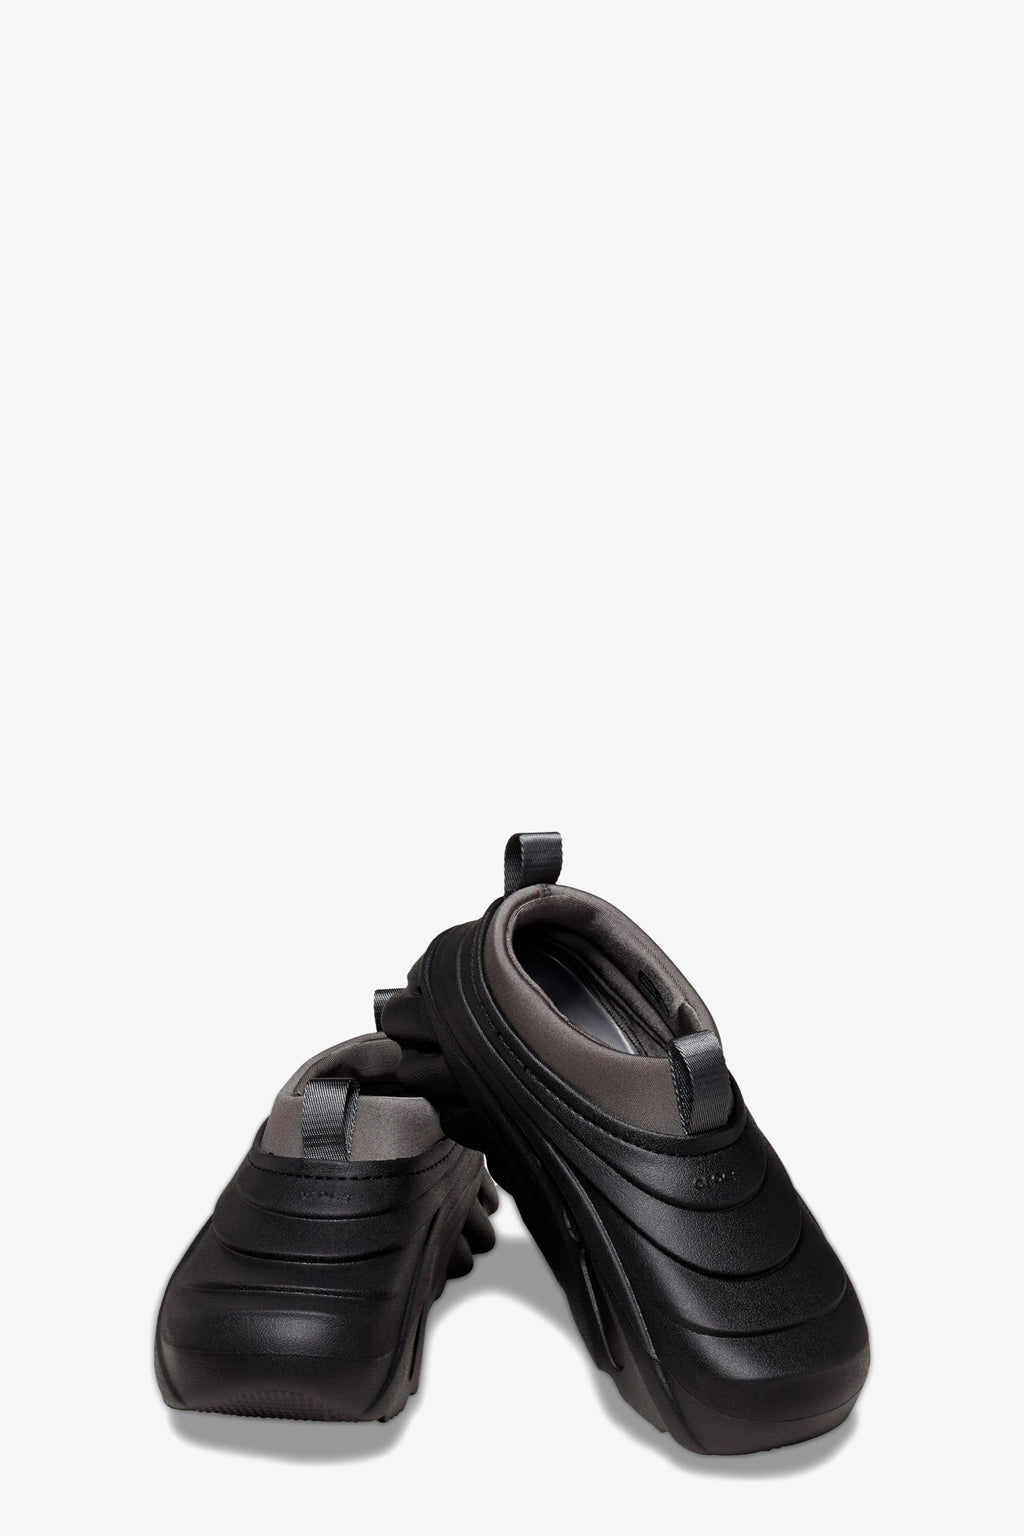 alt-image__Black-rubber-slip-on-sneaker---Echo-Storm